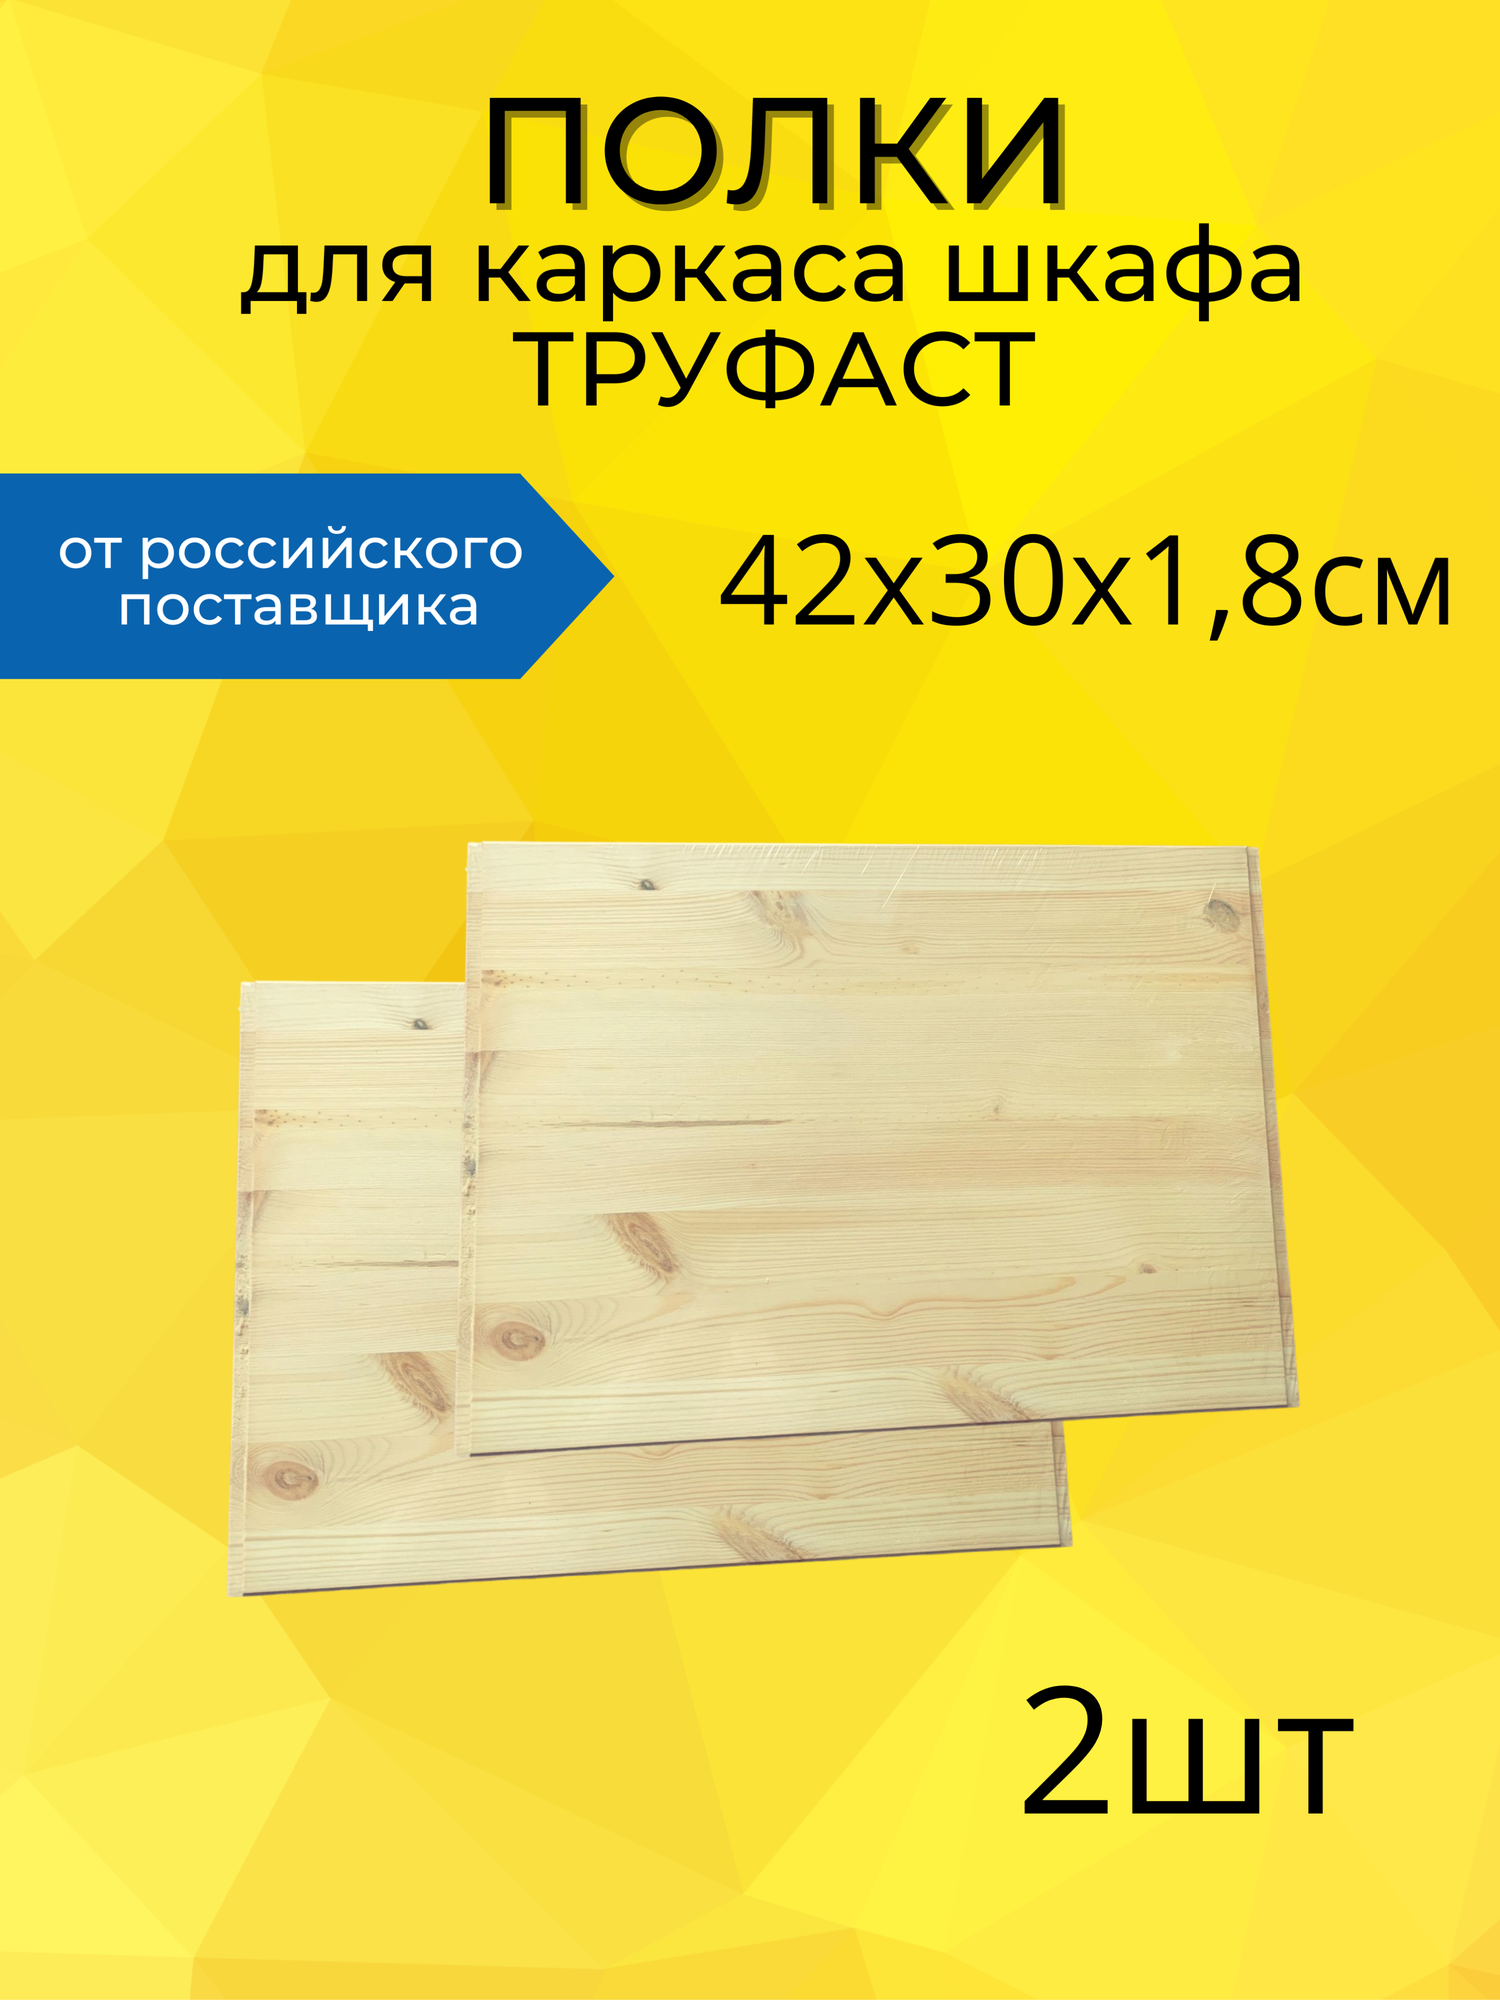 Полка деревянная для каркаса шкафа Труфаст, 42х30х1.8 см, 2 шт